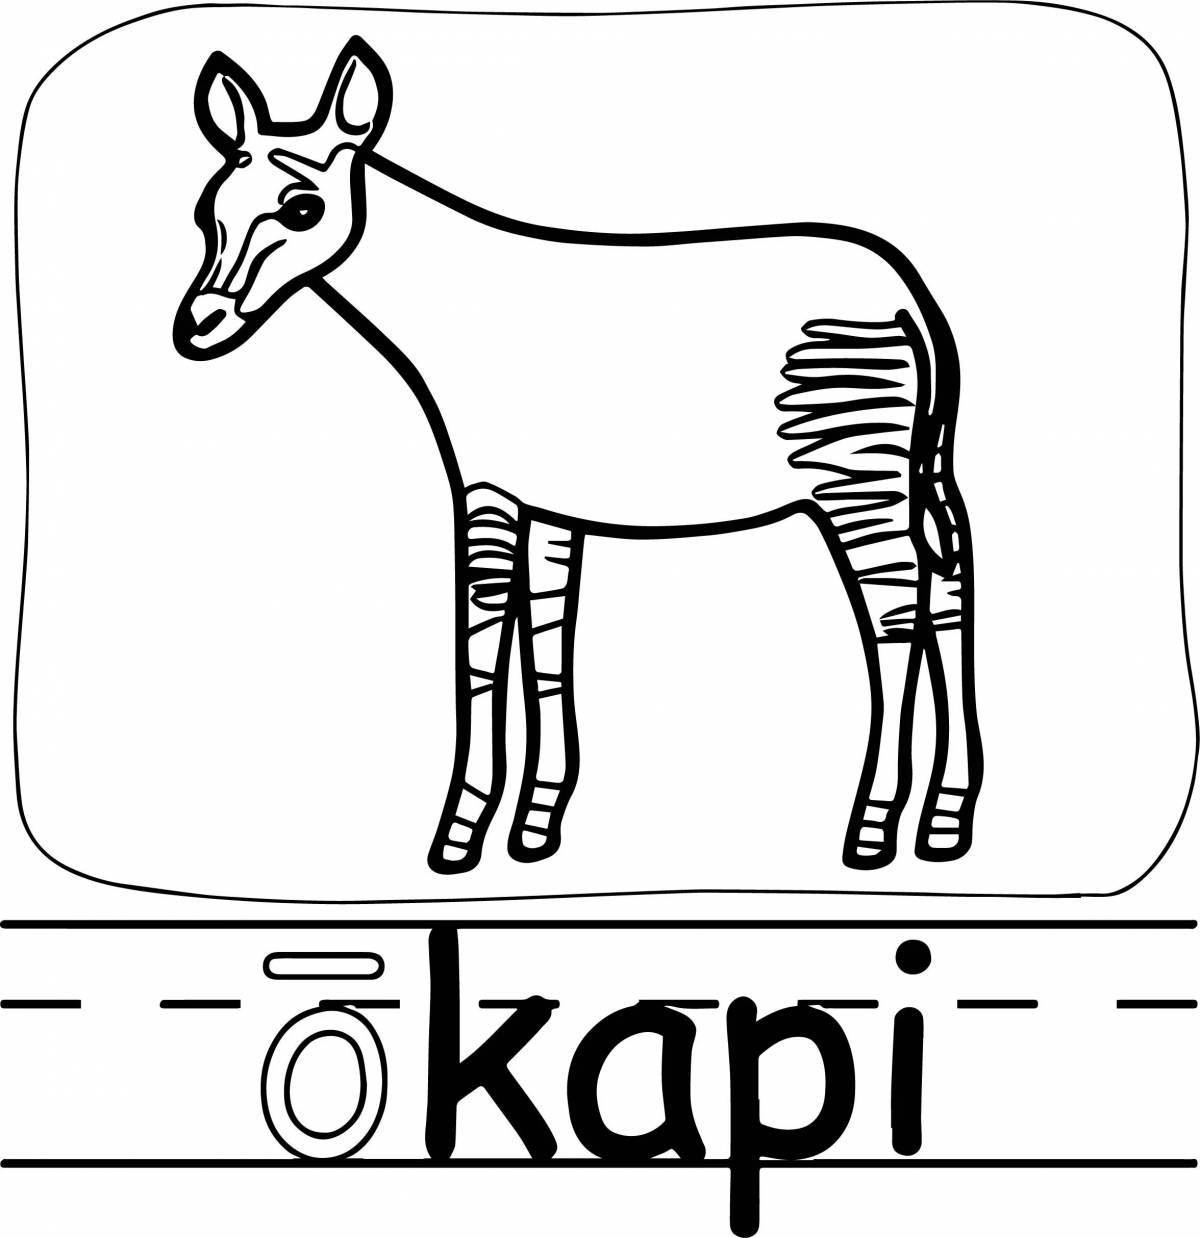 Colorful okapi coloring page